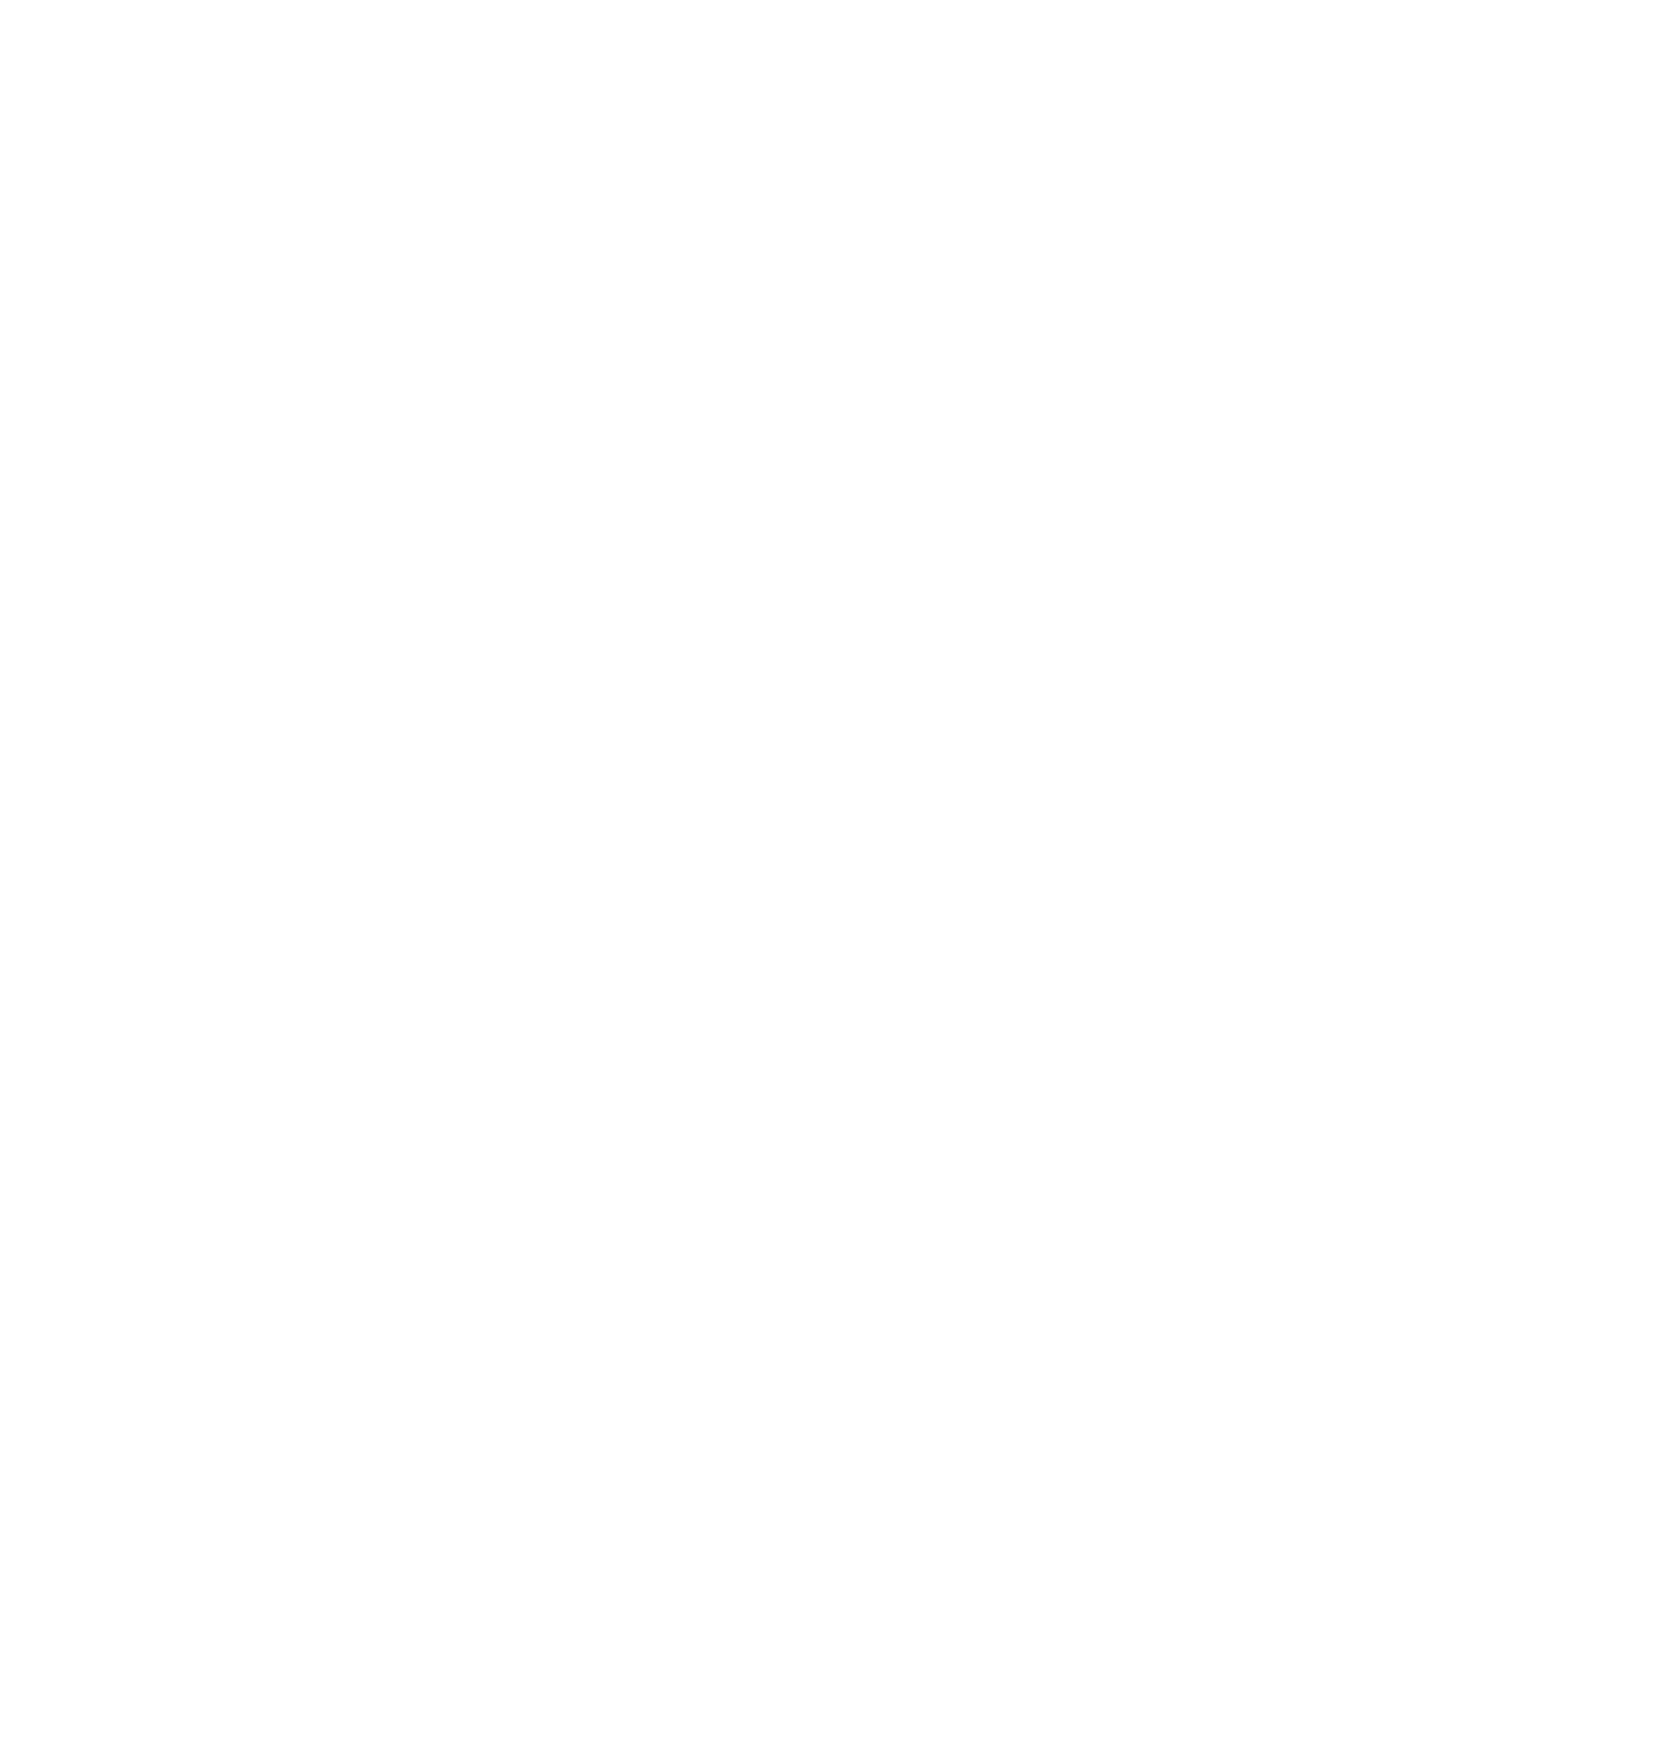 Кирилл Макаров, без названия, 2019, холст, масло, 86 х 170 см, 120х121 см